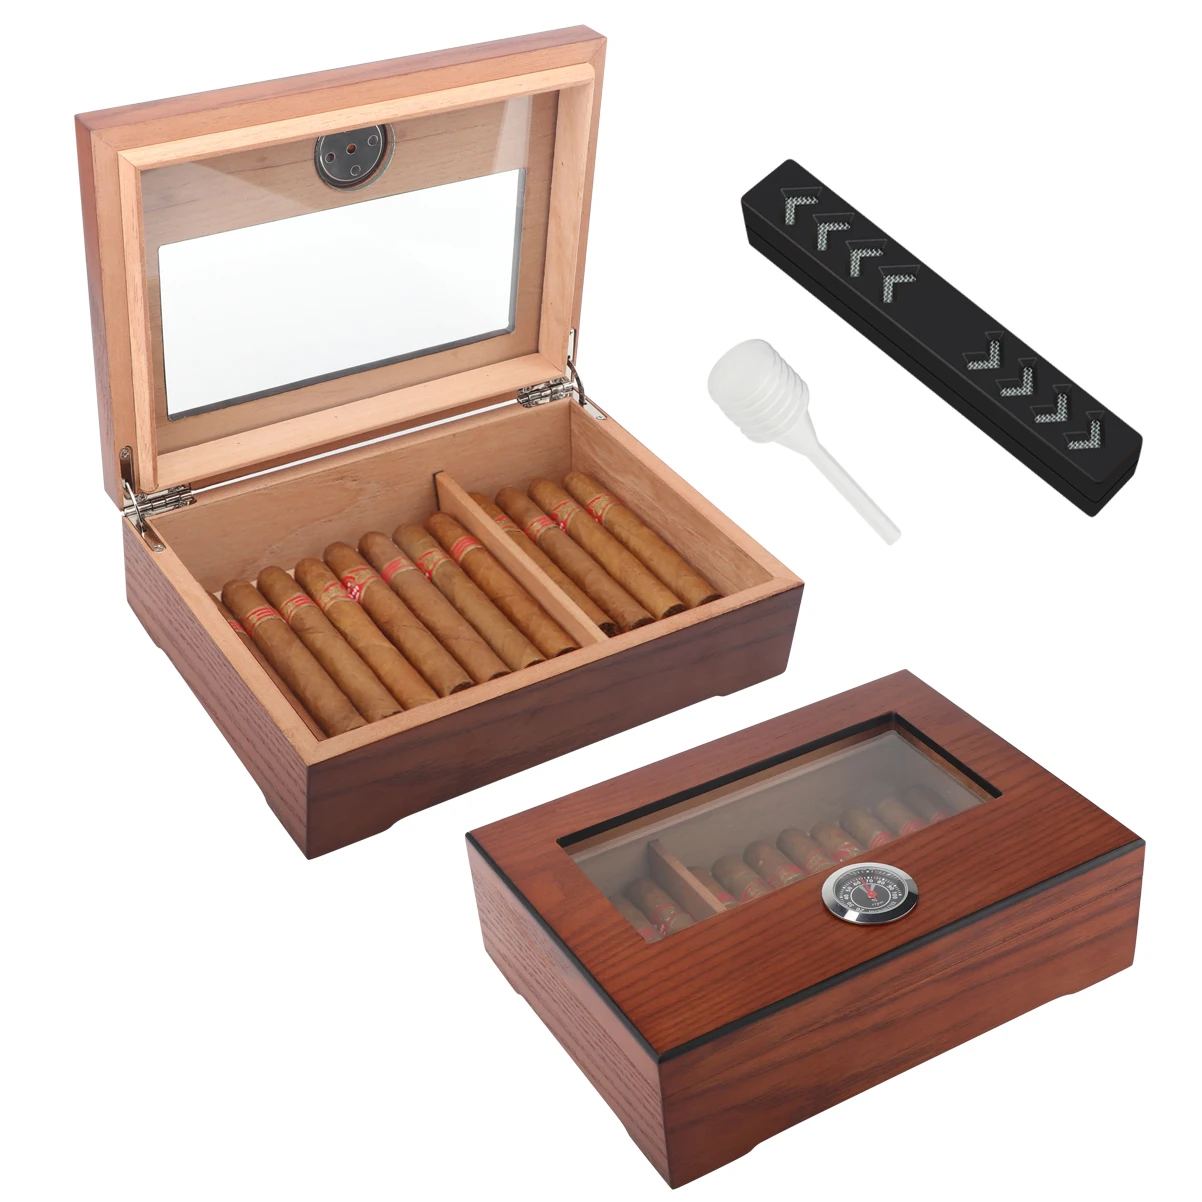 Xifei Cedar Wood Cigar Humidor W/ Hygrometer Humidifier Portable Smoking Box Accessories Glass Window Cigarette Case For Cohiba